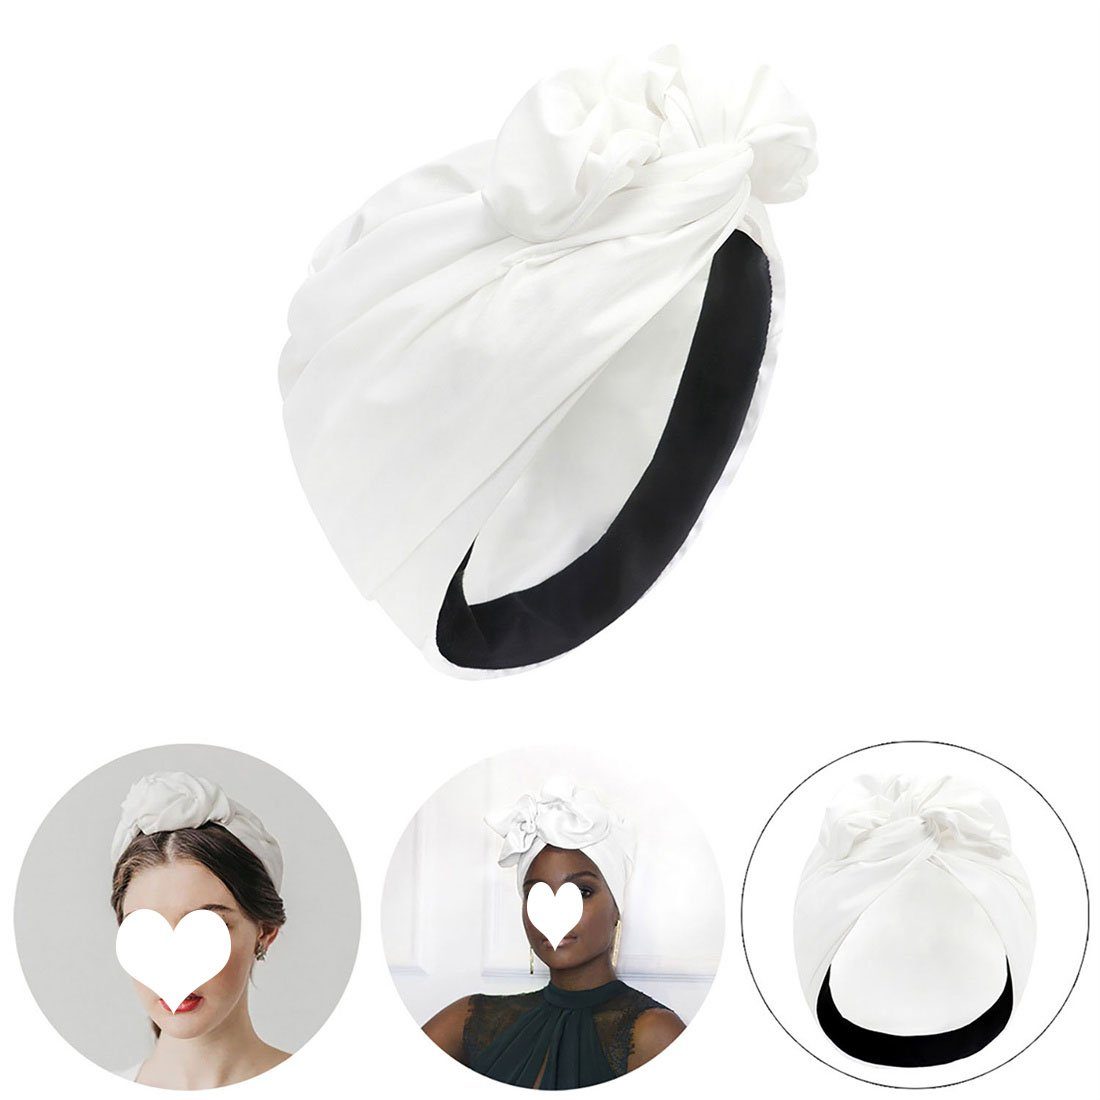 Schlapphut Frauen Mode Weiß Crossover Vintage Overhead Cap DÖRÖY Hut, Turban Turban,